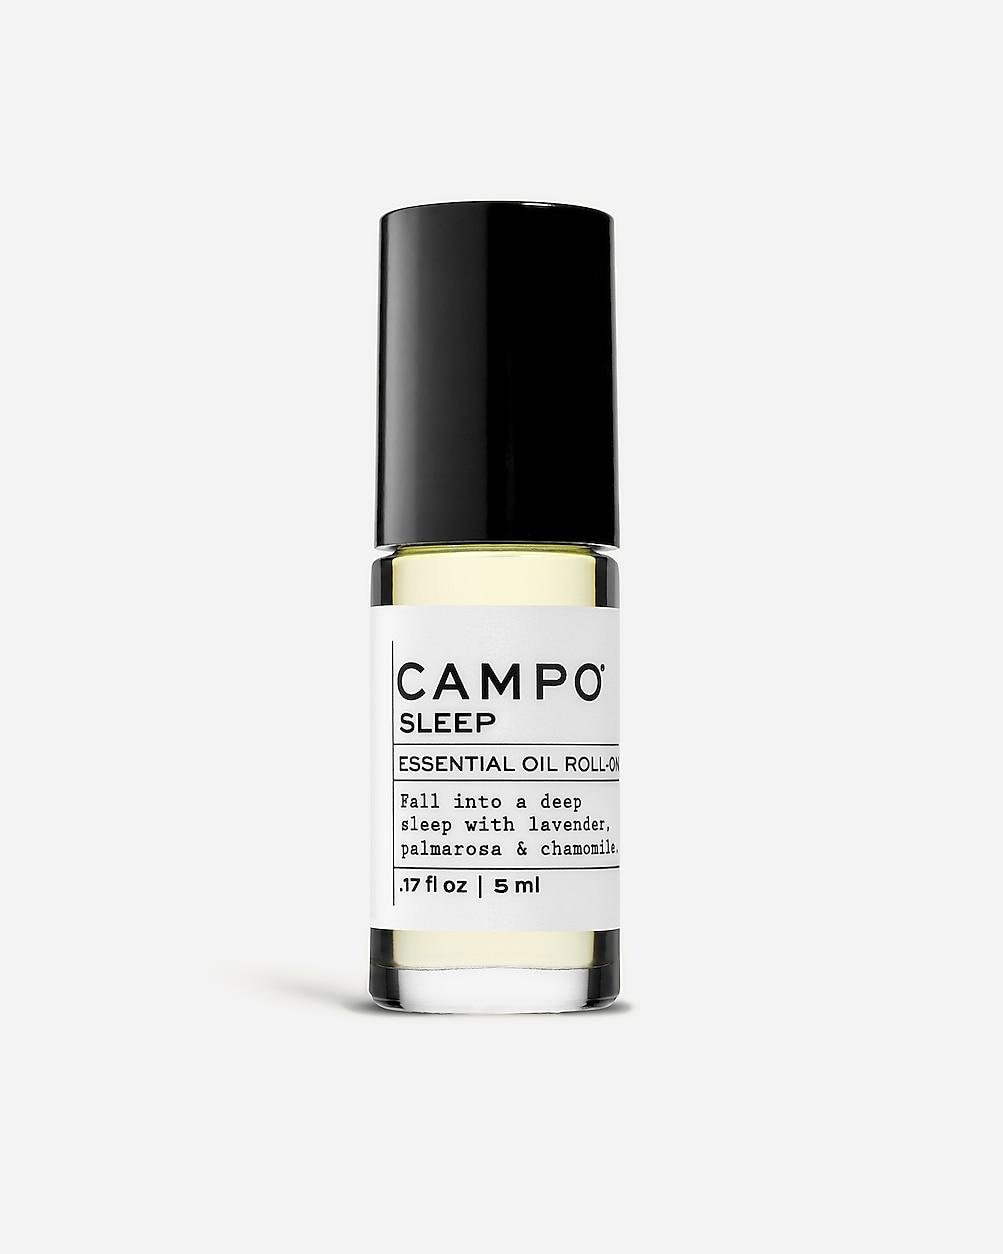 CAMPO® SLEEP roll-on oil by J.CREW